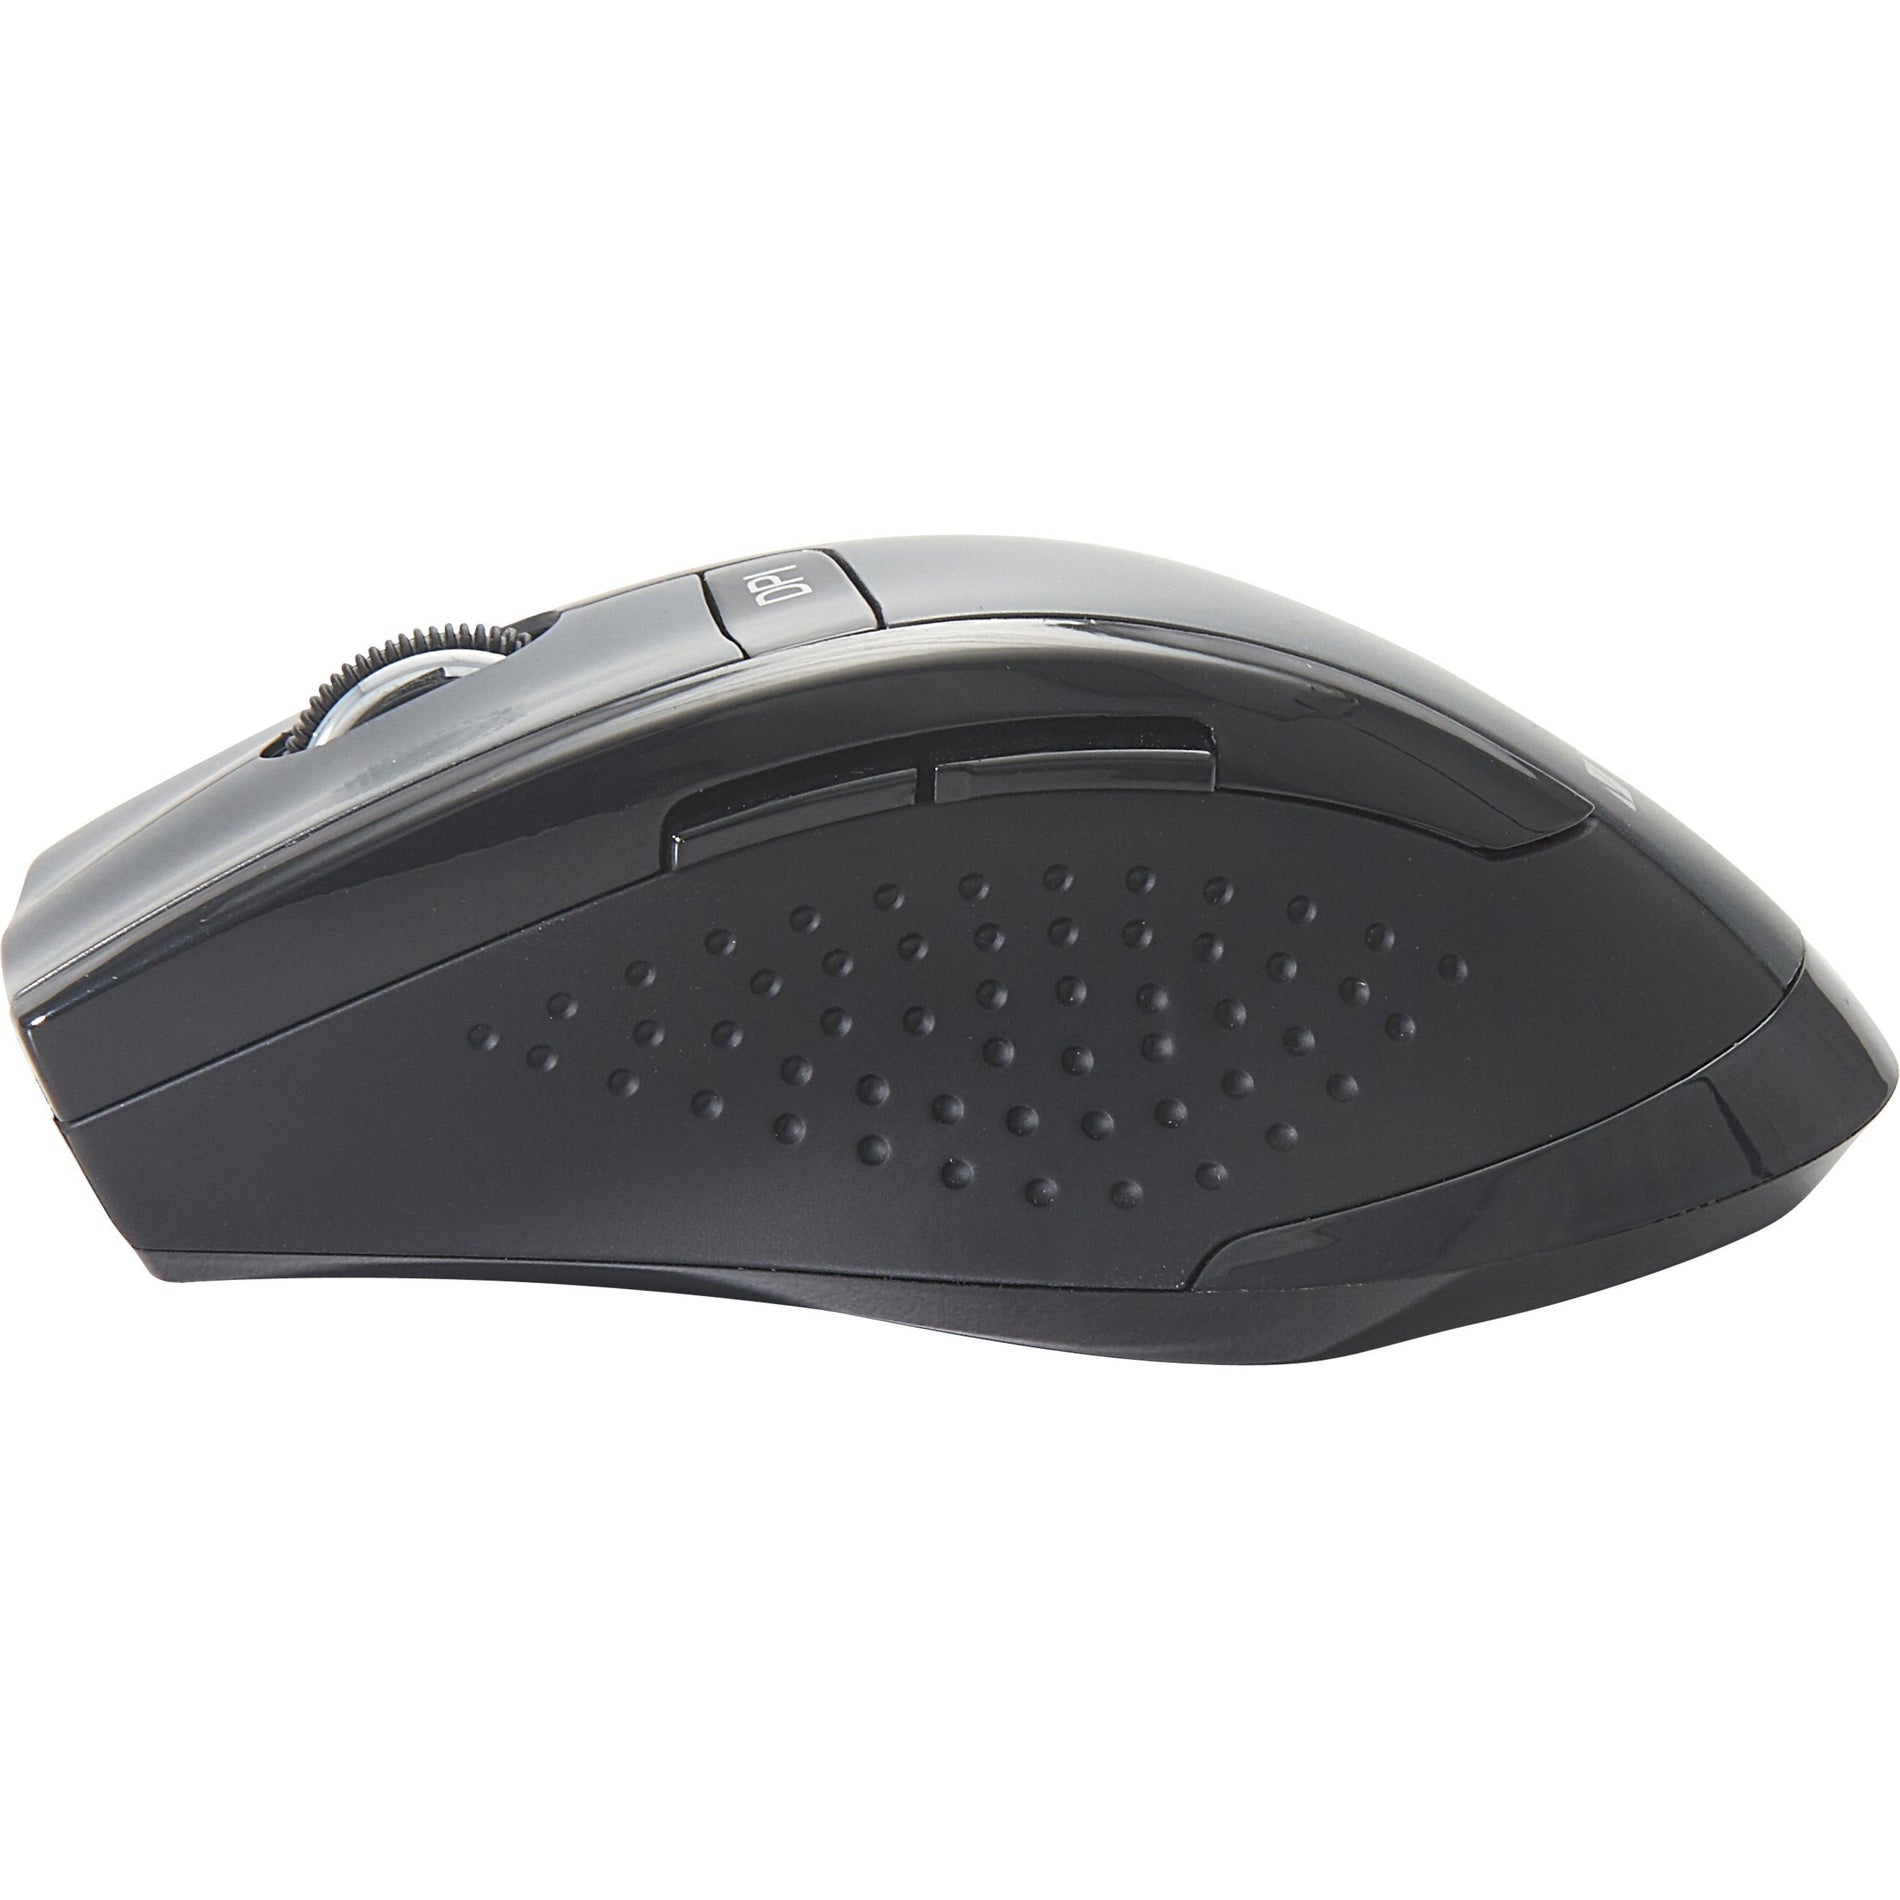 Verbatim 99788 Wireless Multimedia Keyboard and 6-Button Mouse Combo - Black, Quiet Keys, Slim Design